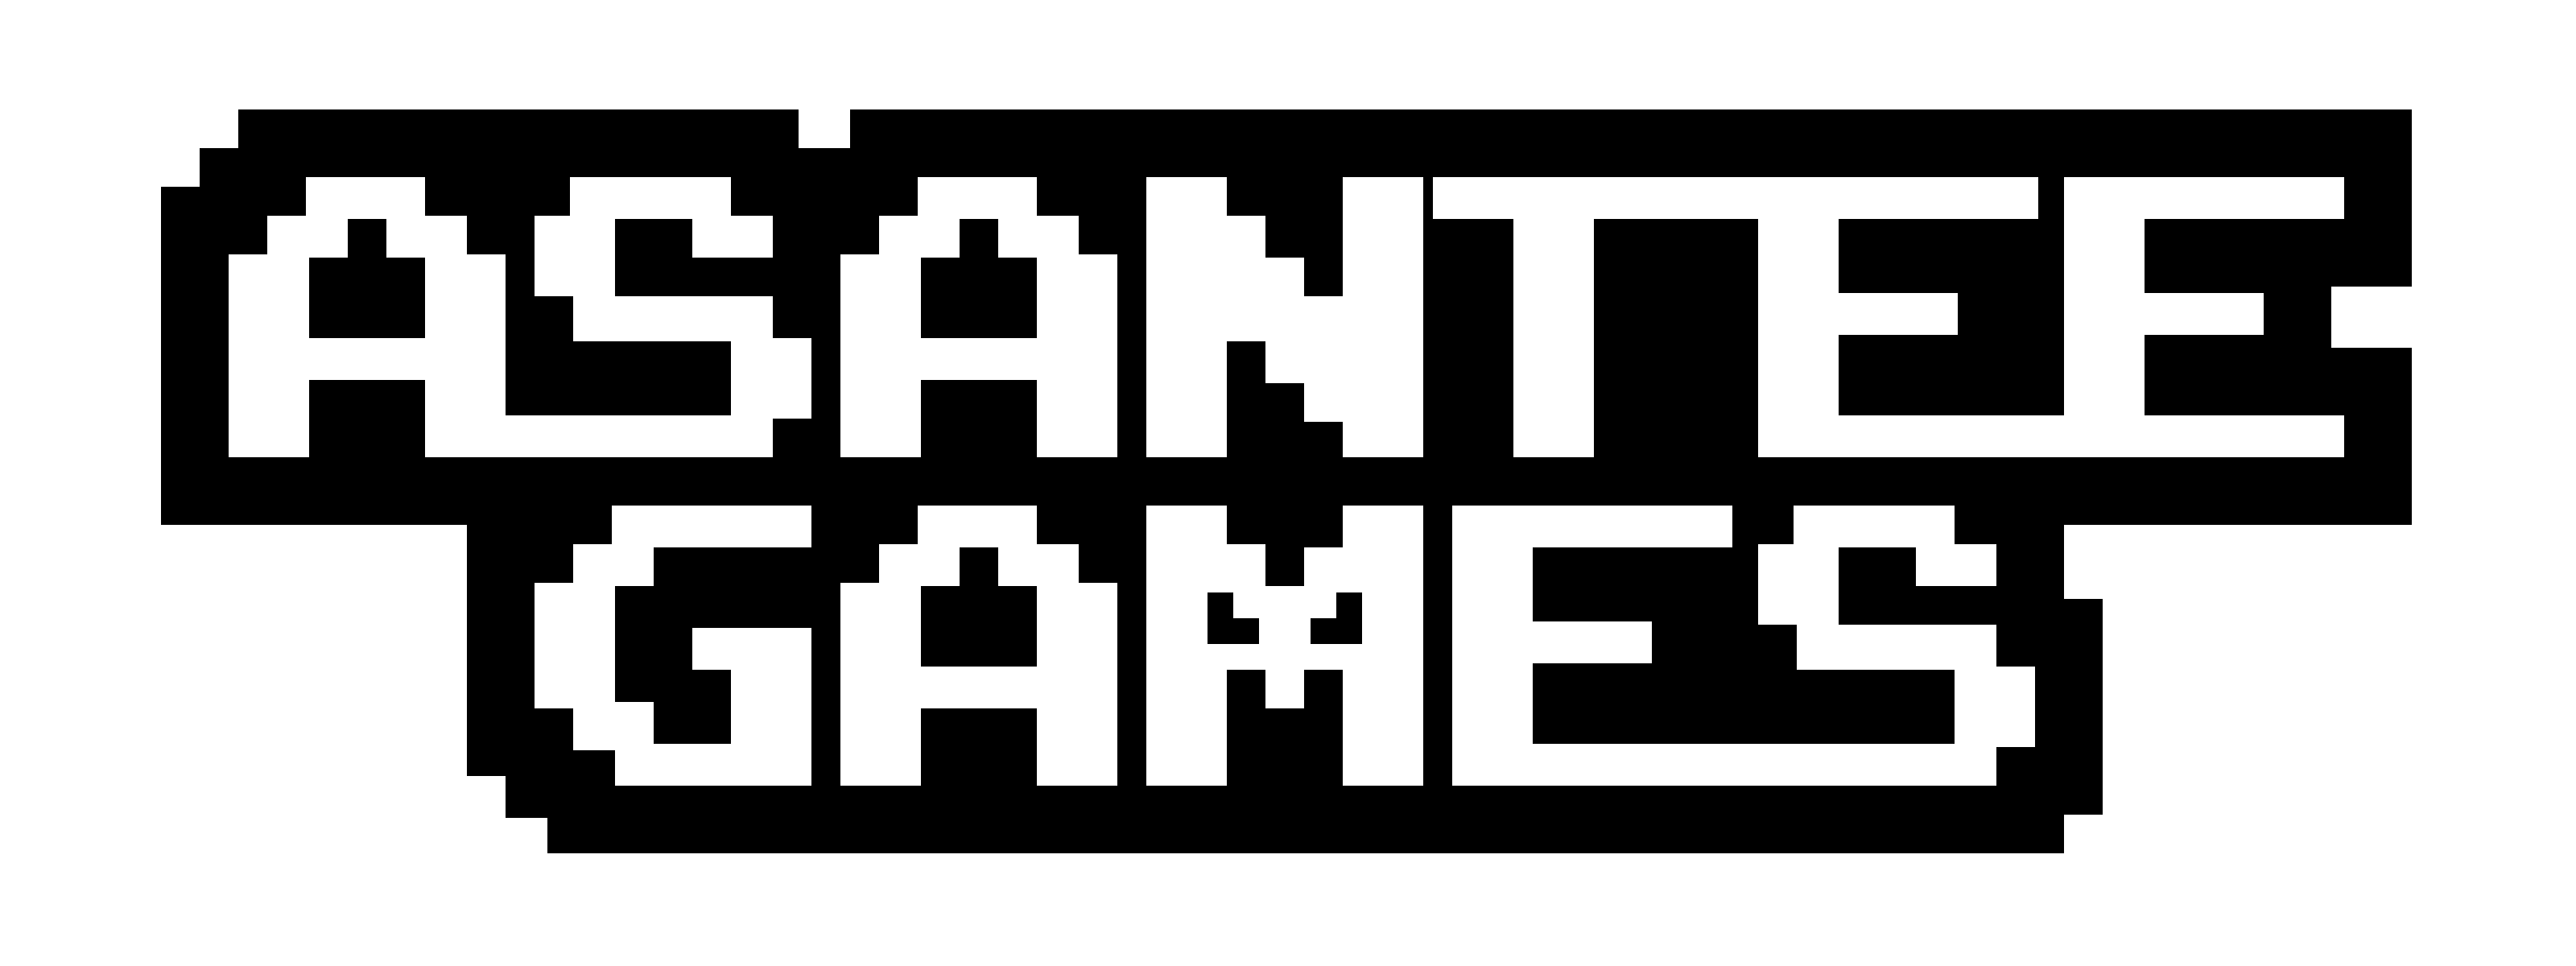 Asantee Games